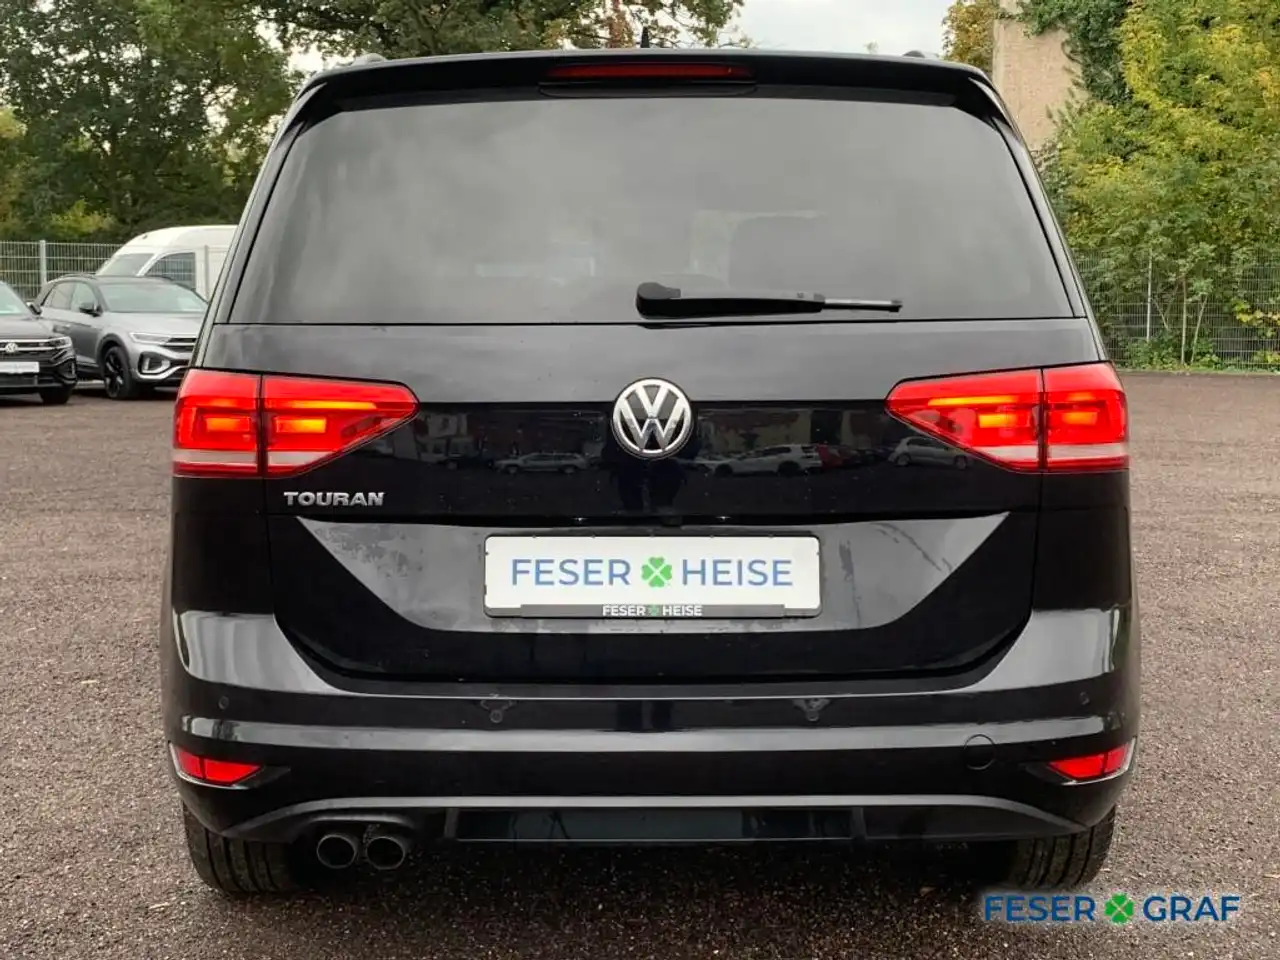 VW TOURAN Gebraucht, Diesel, Automatik, FzN: VTI82-1189 🍀 Feser-Graf  Fahrzeugsuche